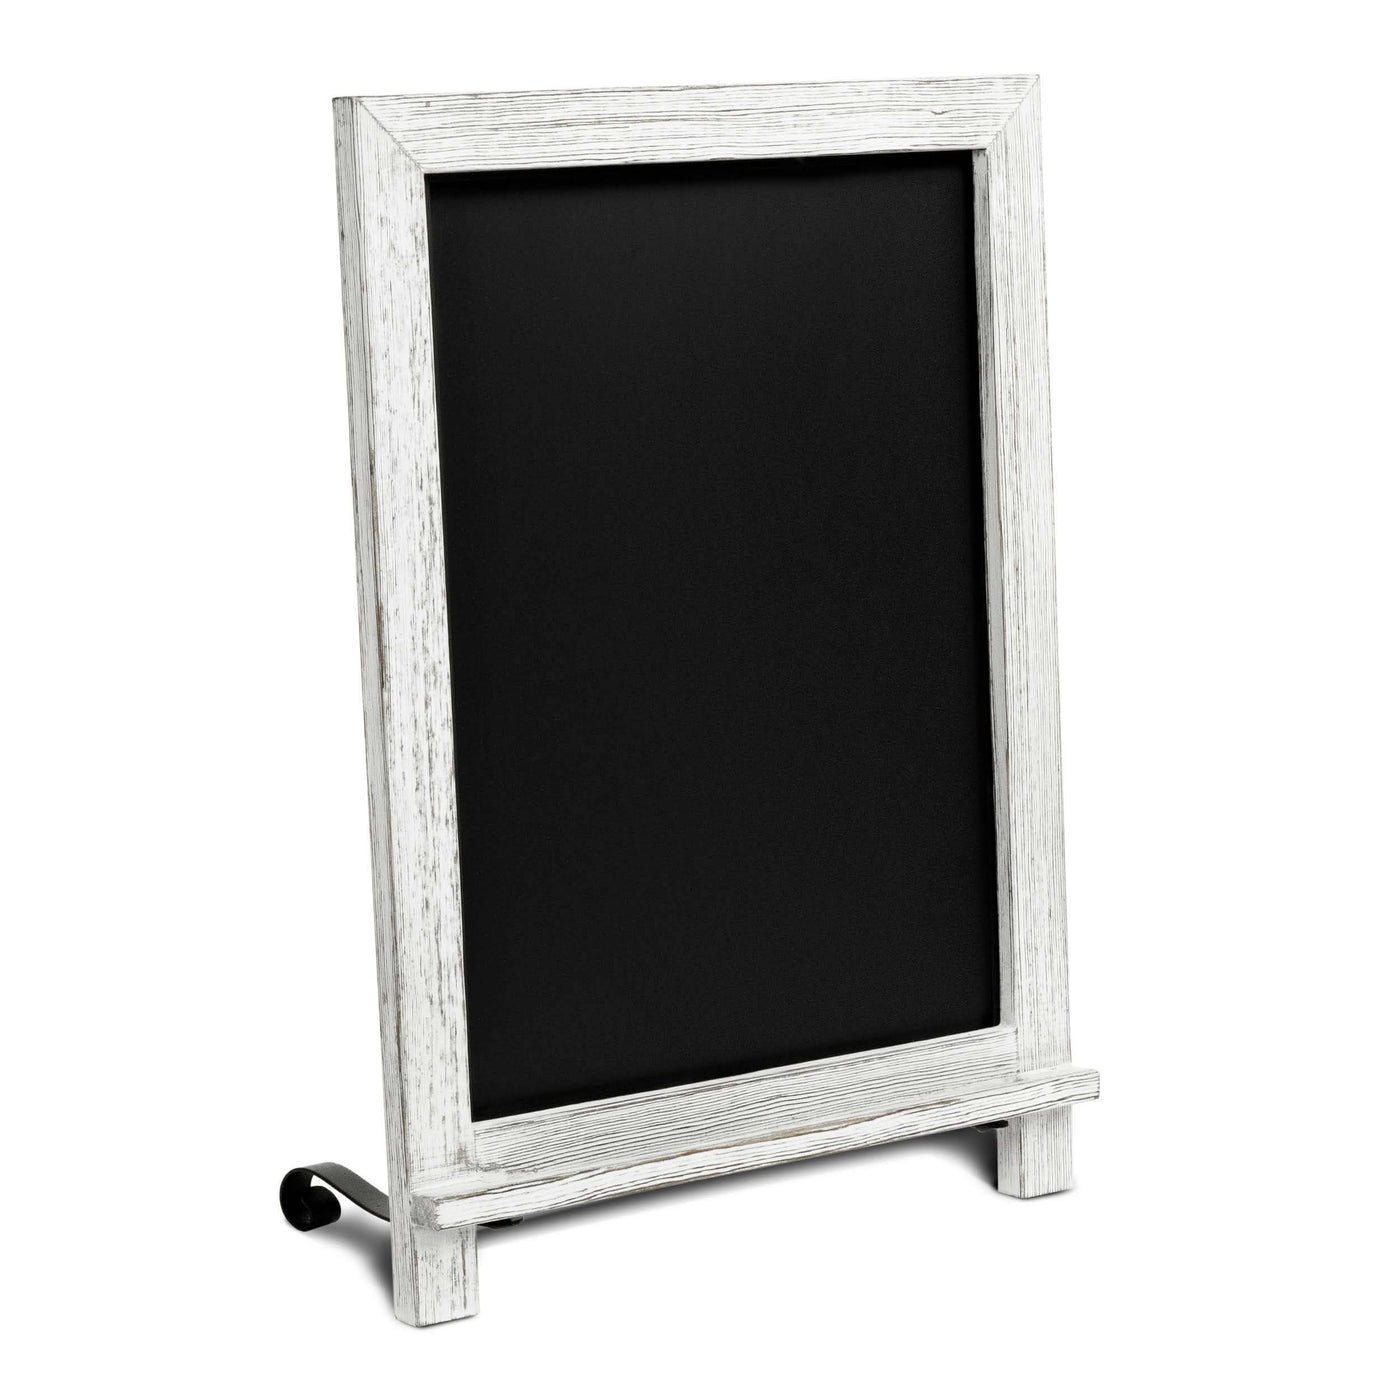 12” x 17” Rustic Tabletop Chalkboard Sign - HANGING or FREESTANDING Countertop Memo Board - LARGE